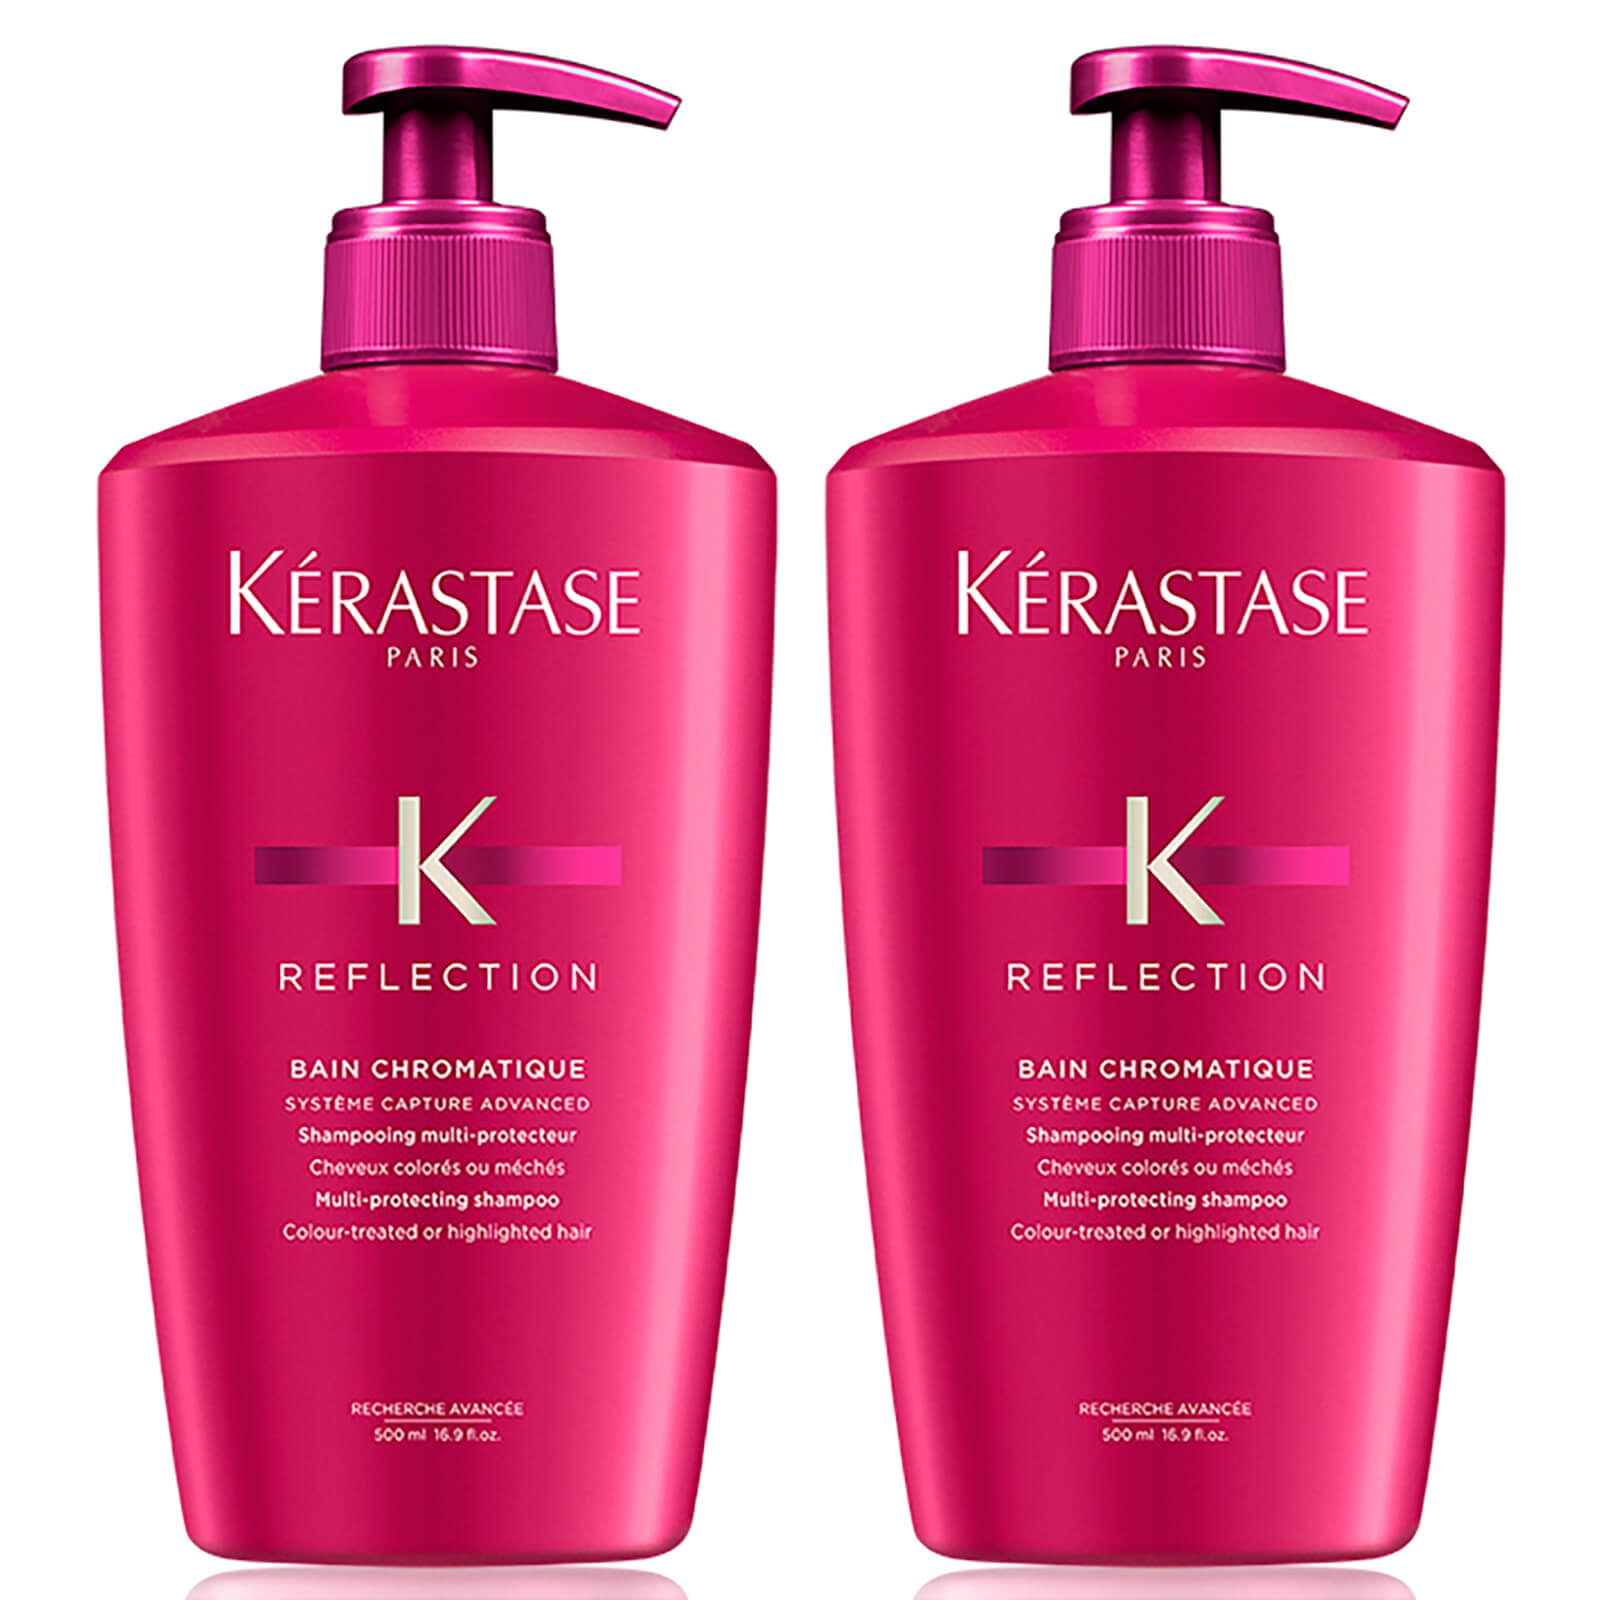 Kérastase Reflection Bain Chromatique Captive Shampoo 500ml Duo